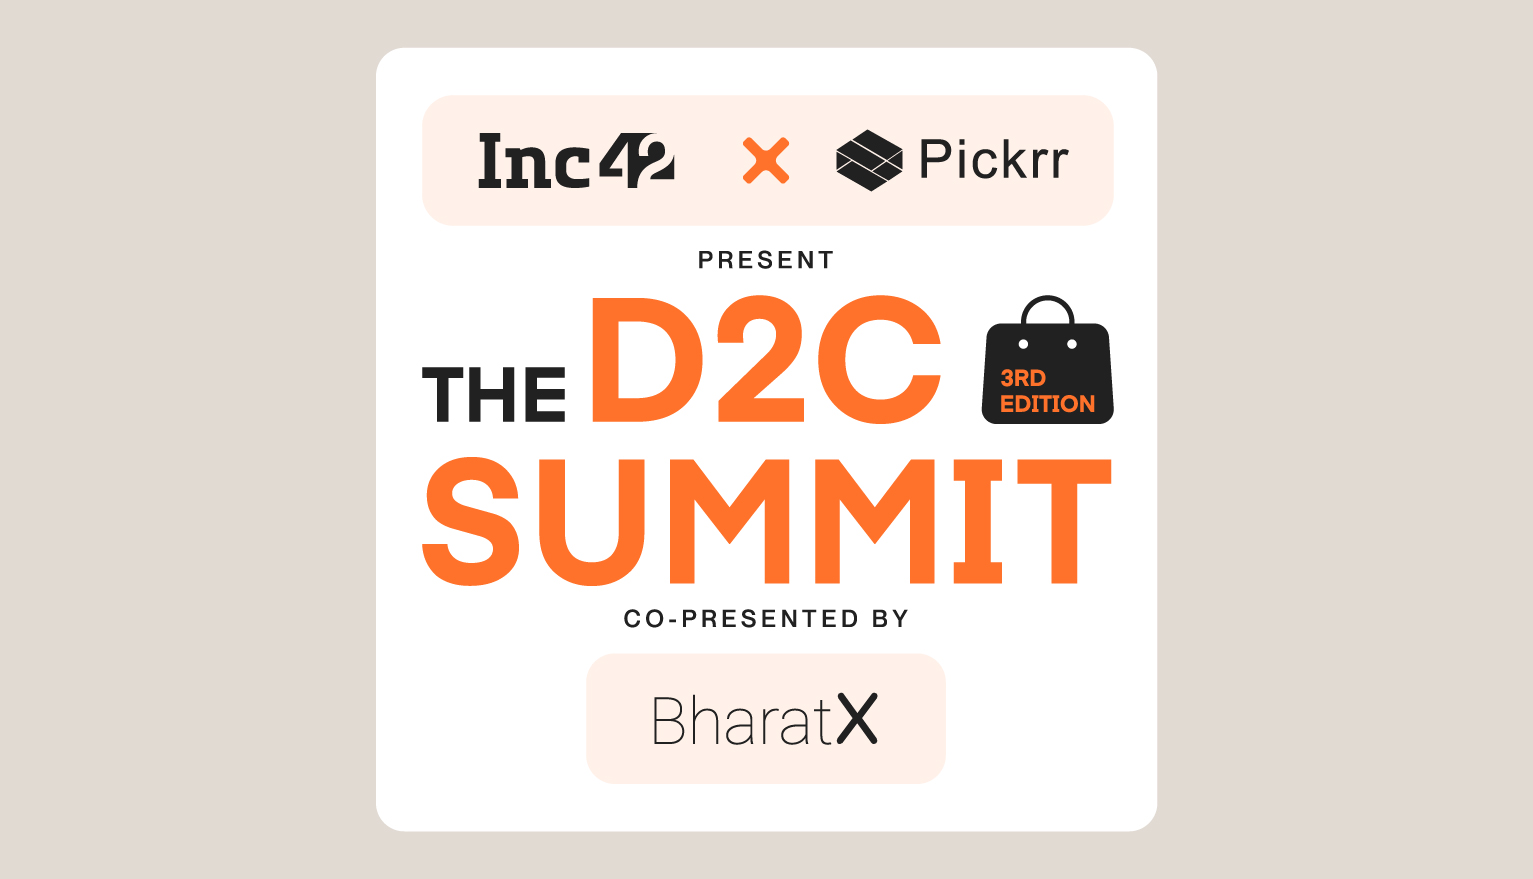 The D2C Summit 3